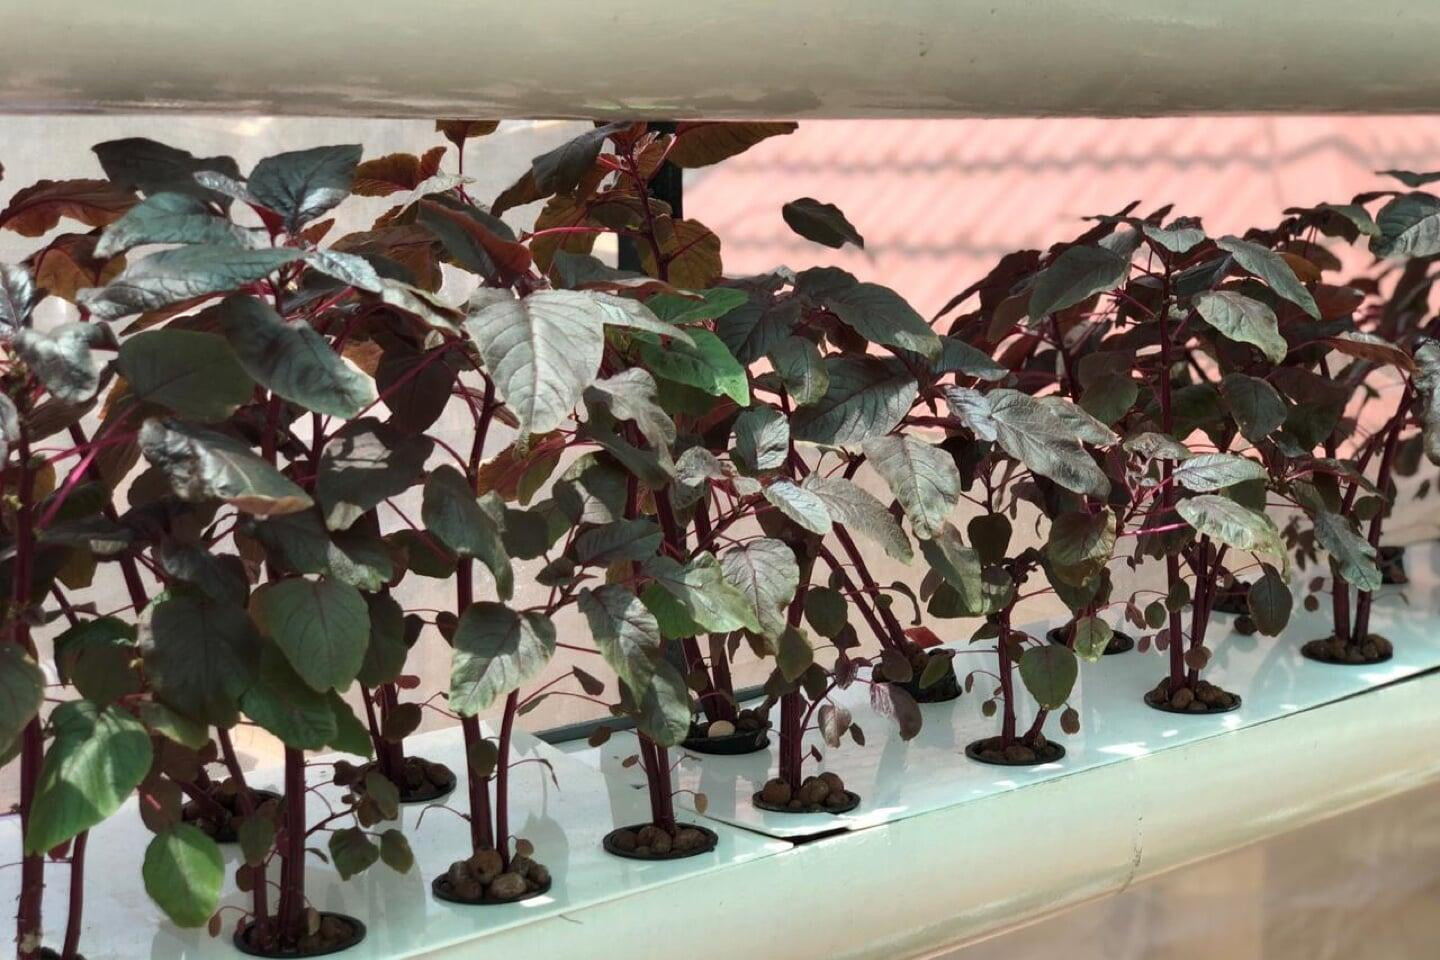 Growing Amaranth using Hydroponics